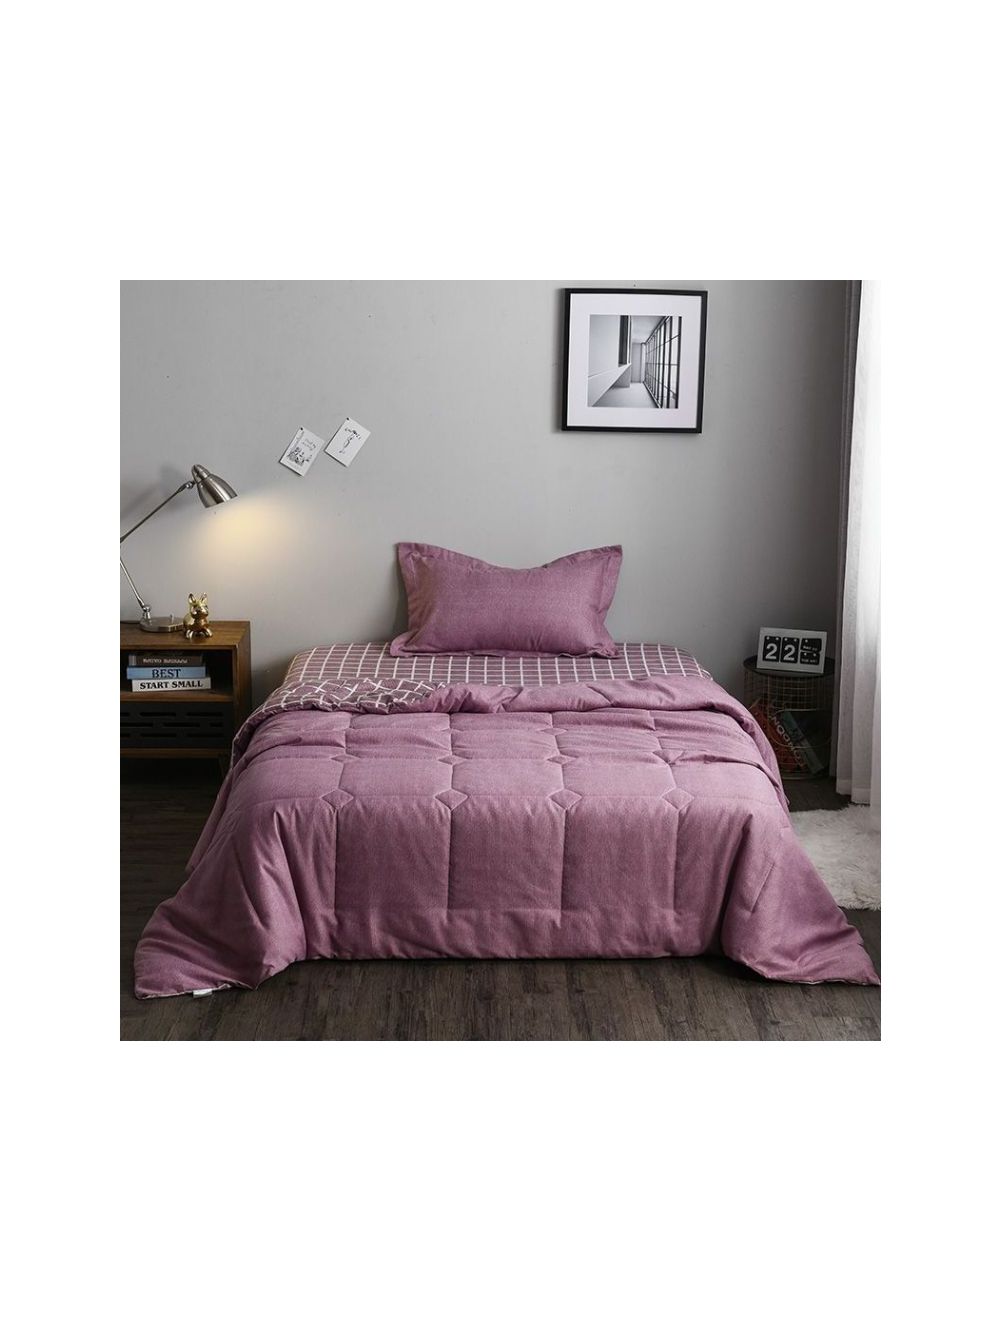 Rishahome 3 Piece Comforter Set (1 comforter+1 fitted sheet+1 Large pillow case) Microfibre Beira Bean Single-BBSMH/03/57